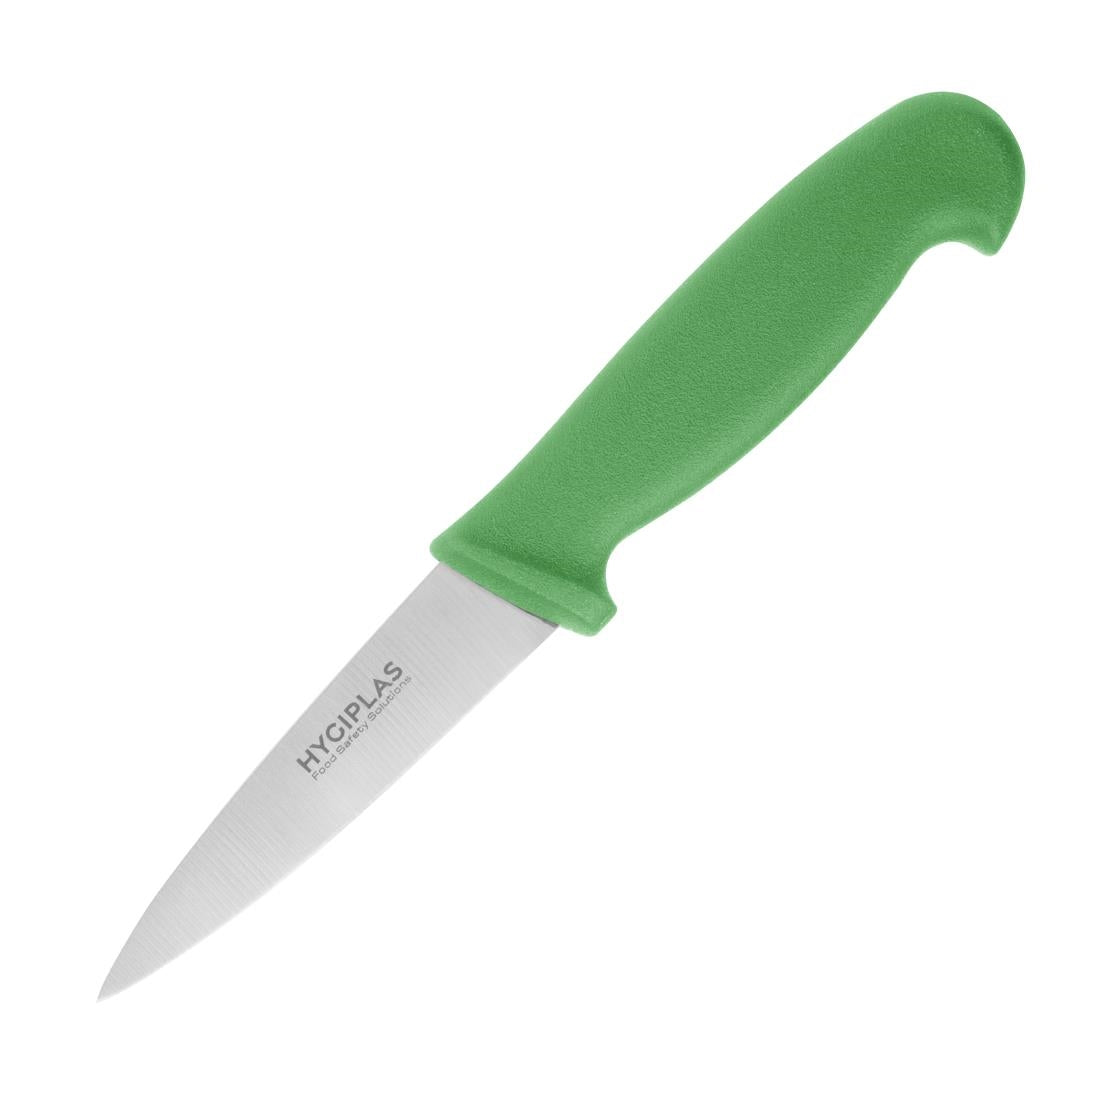 C866 Hygiplas Paring Knife Green 9cm JD Catering Equipment Solutions Ltd